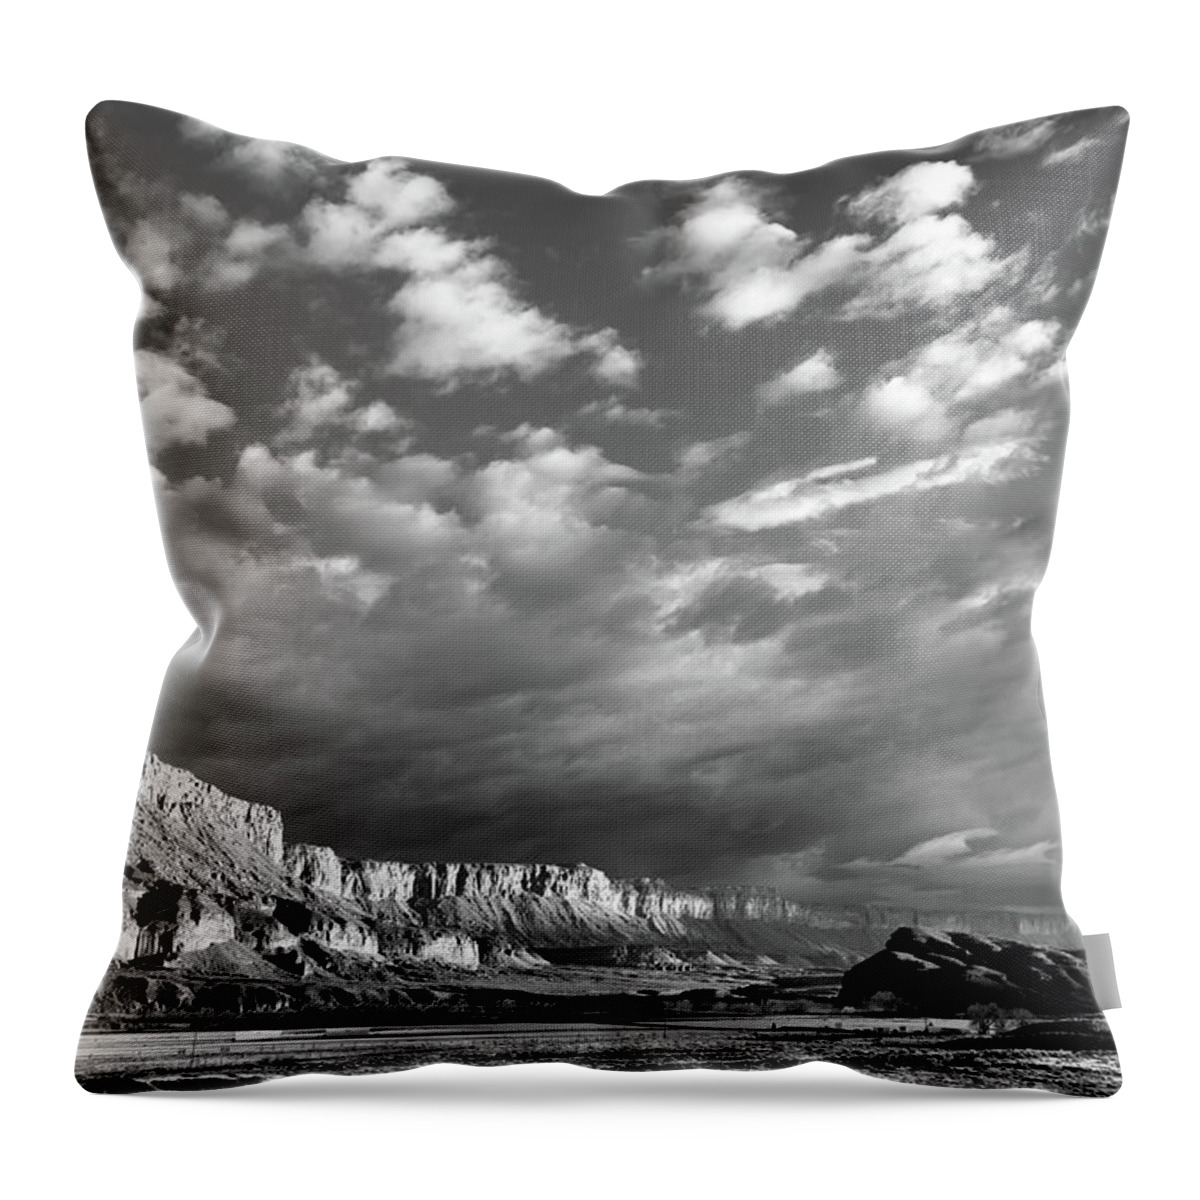  Throw Pillow featuring the photograph Desert panorama by Robert Miller